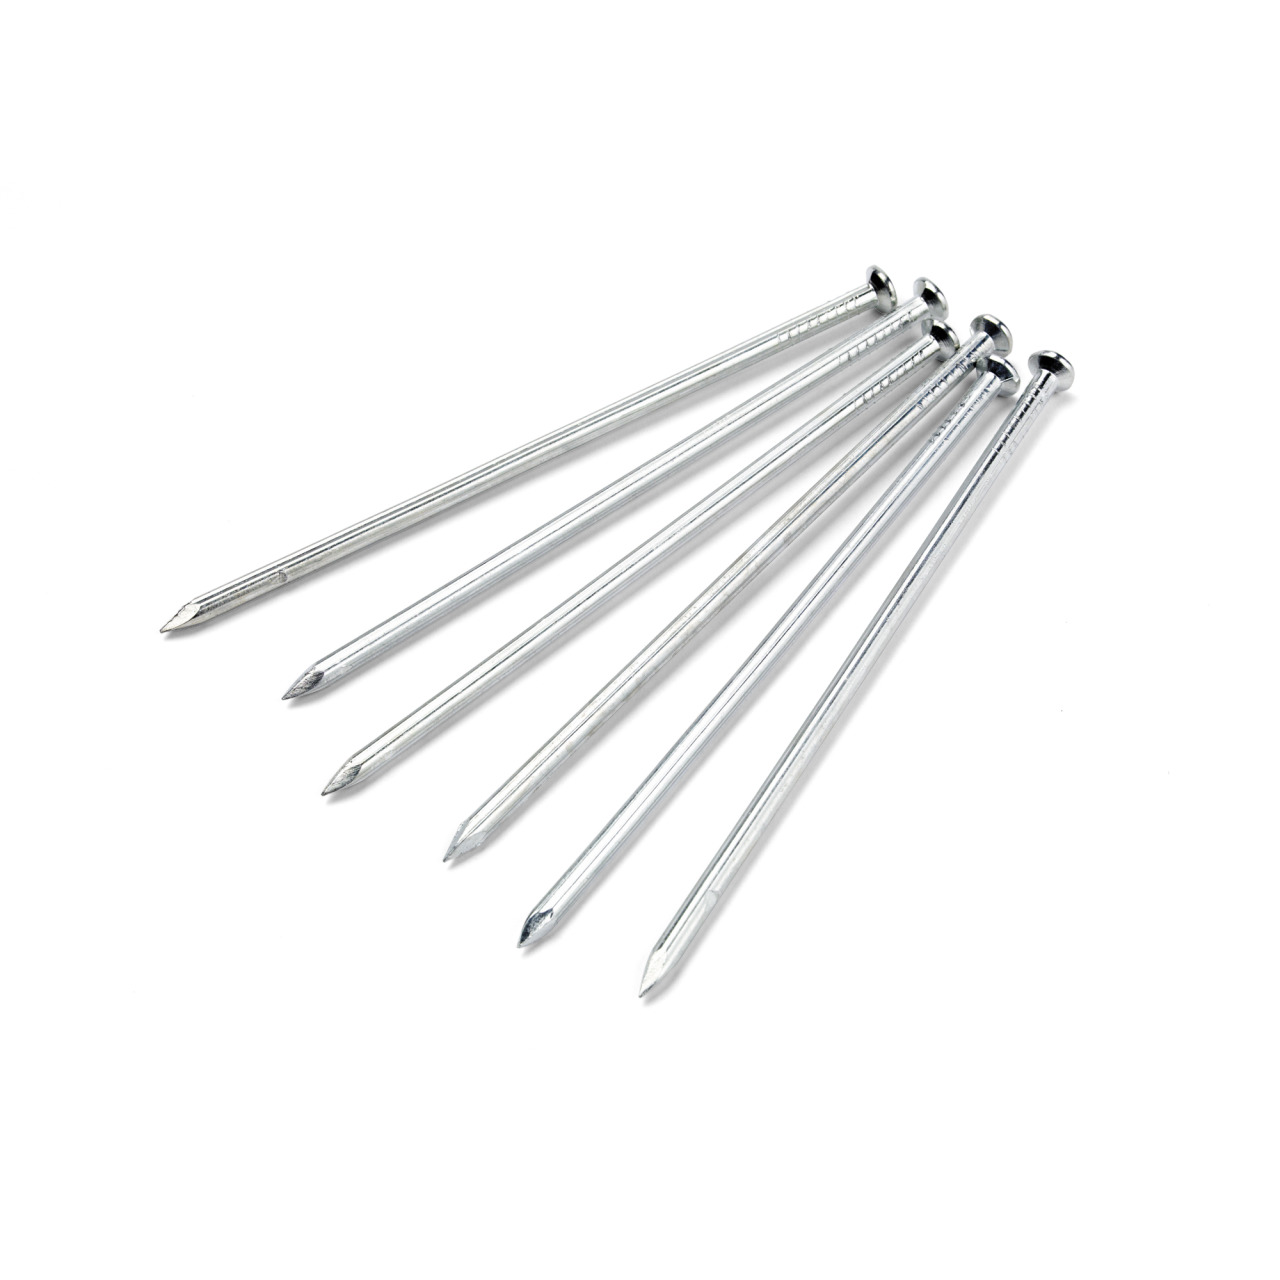 Nägel für Ladestation Stahl (6 Stüc